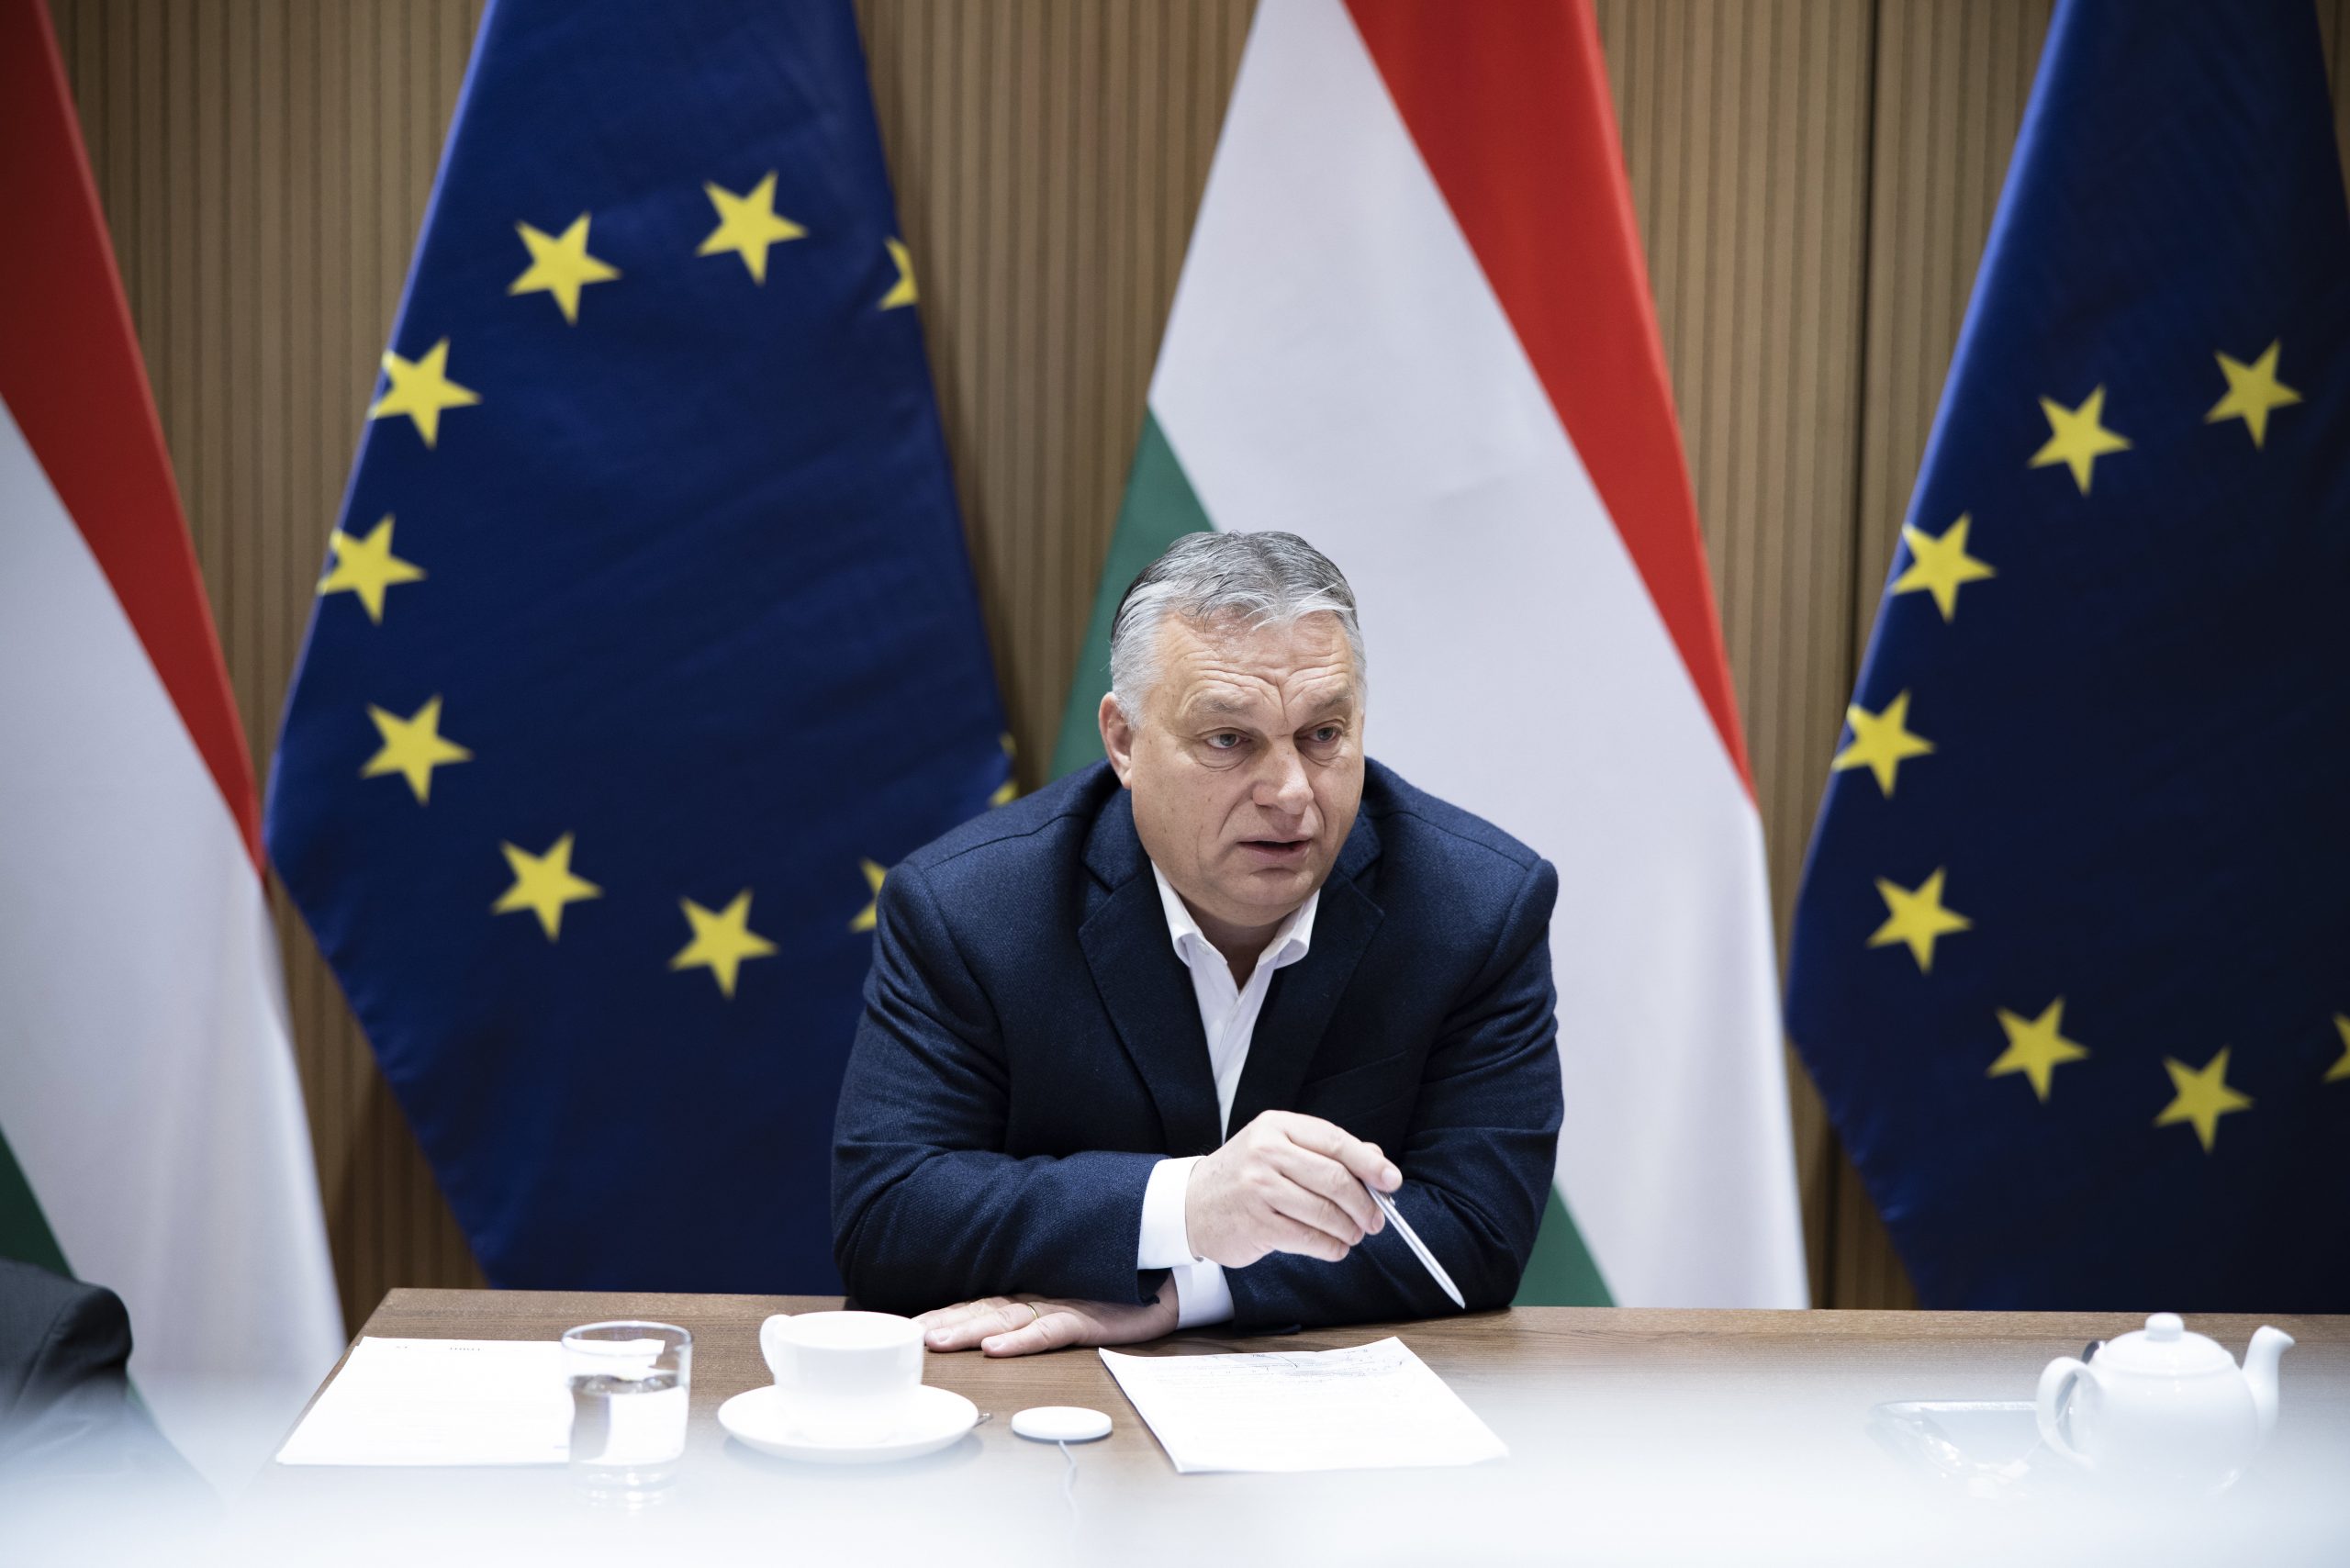 Viktor Orbán Calls for Tougher EU Measures against Migration